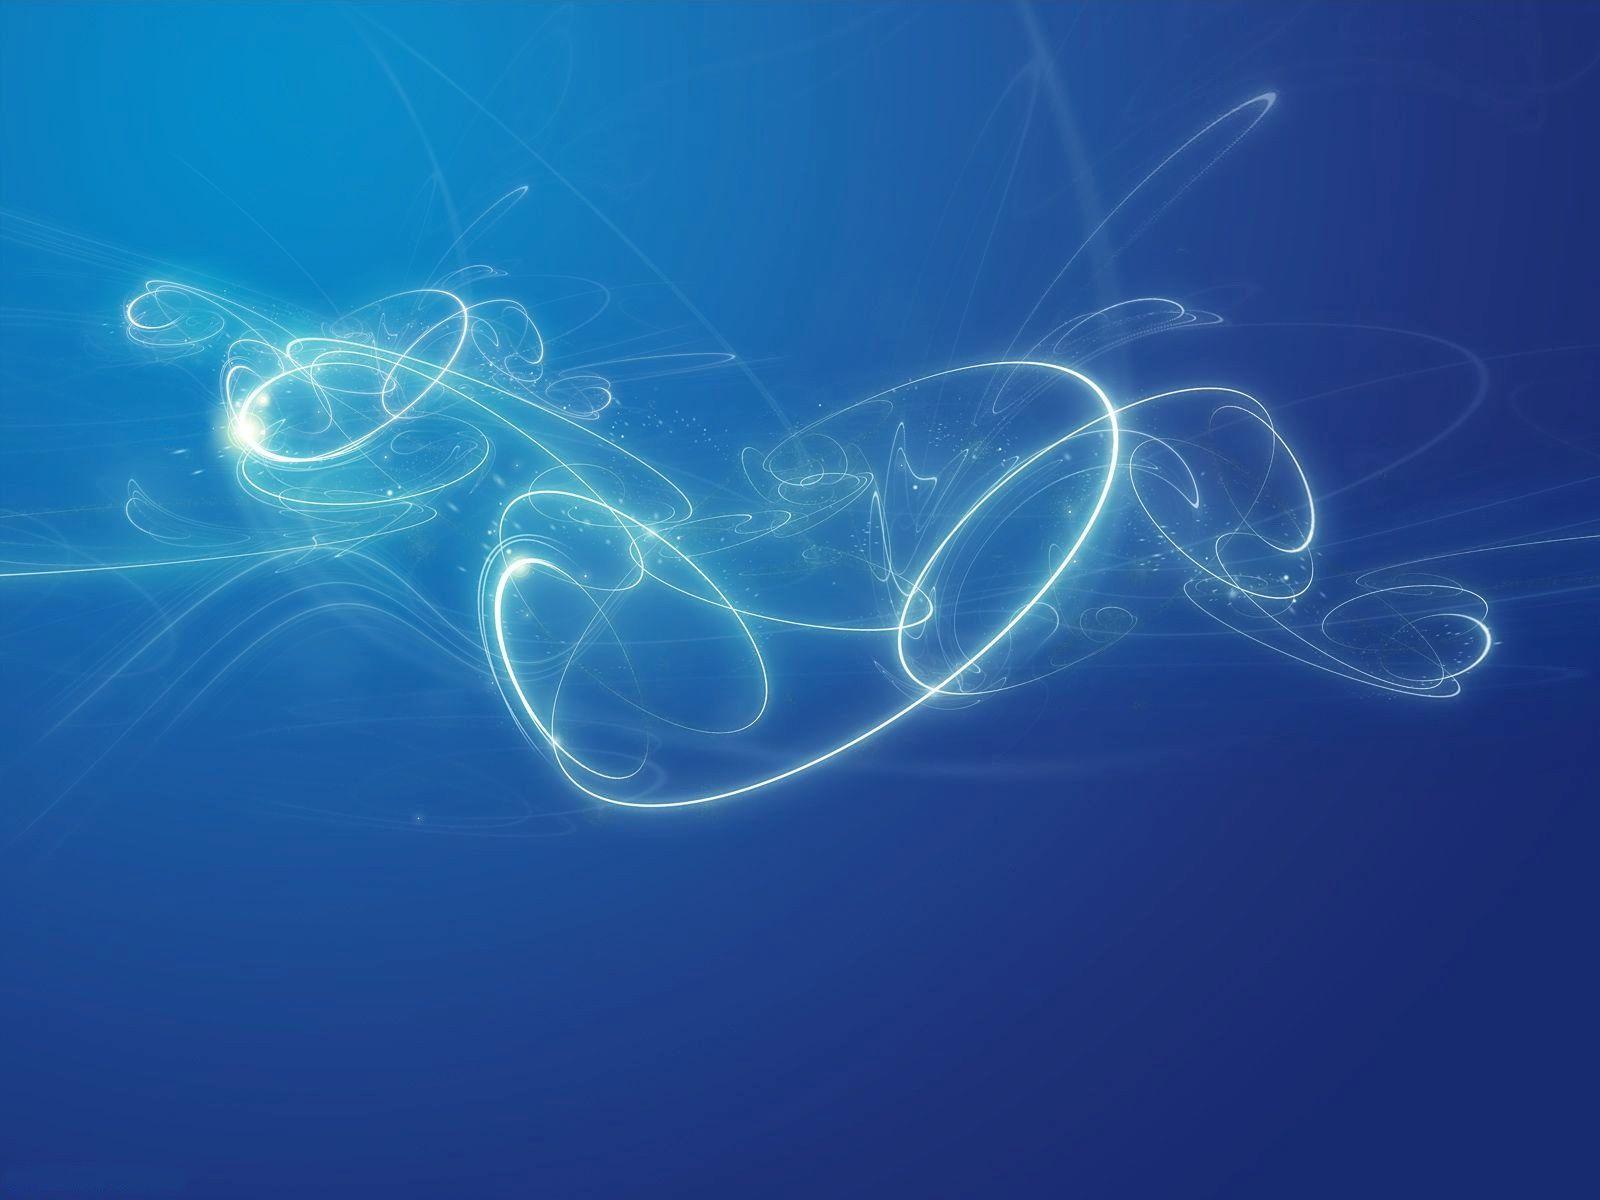 Blue Swirl Decorative Element Background Free